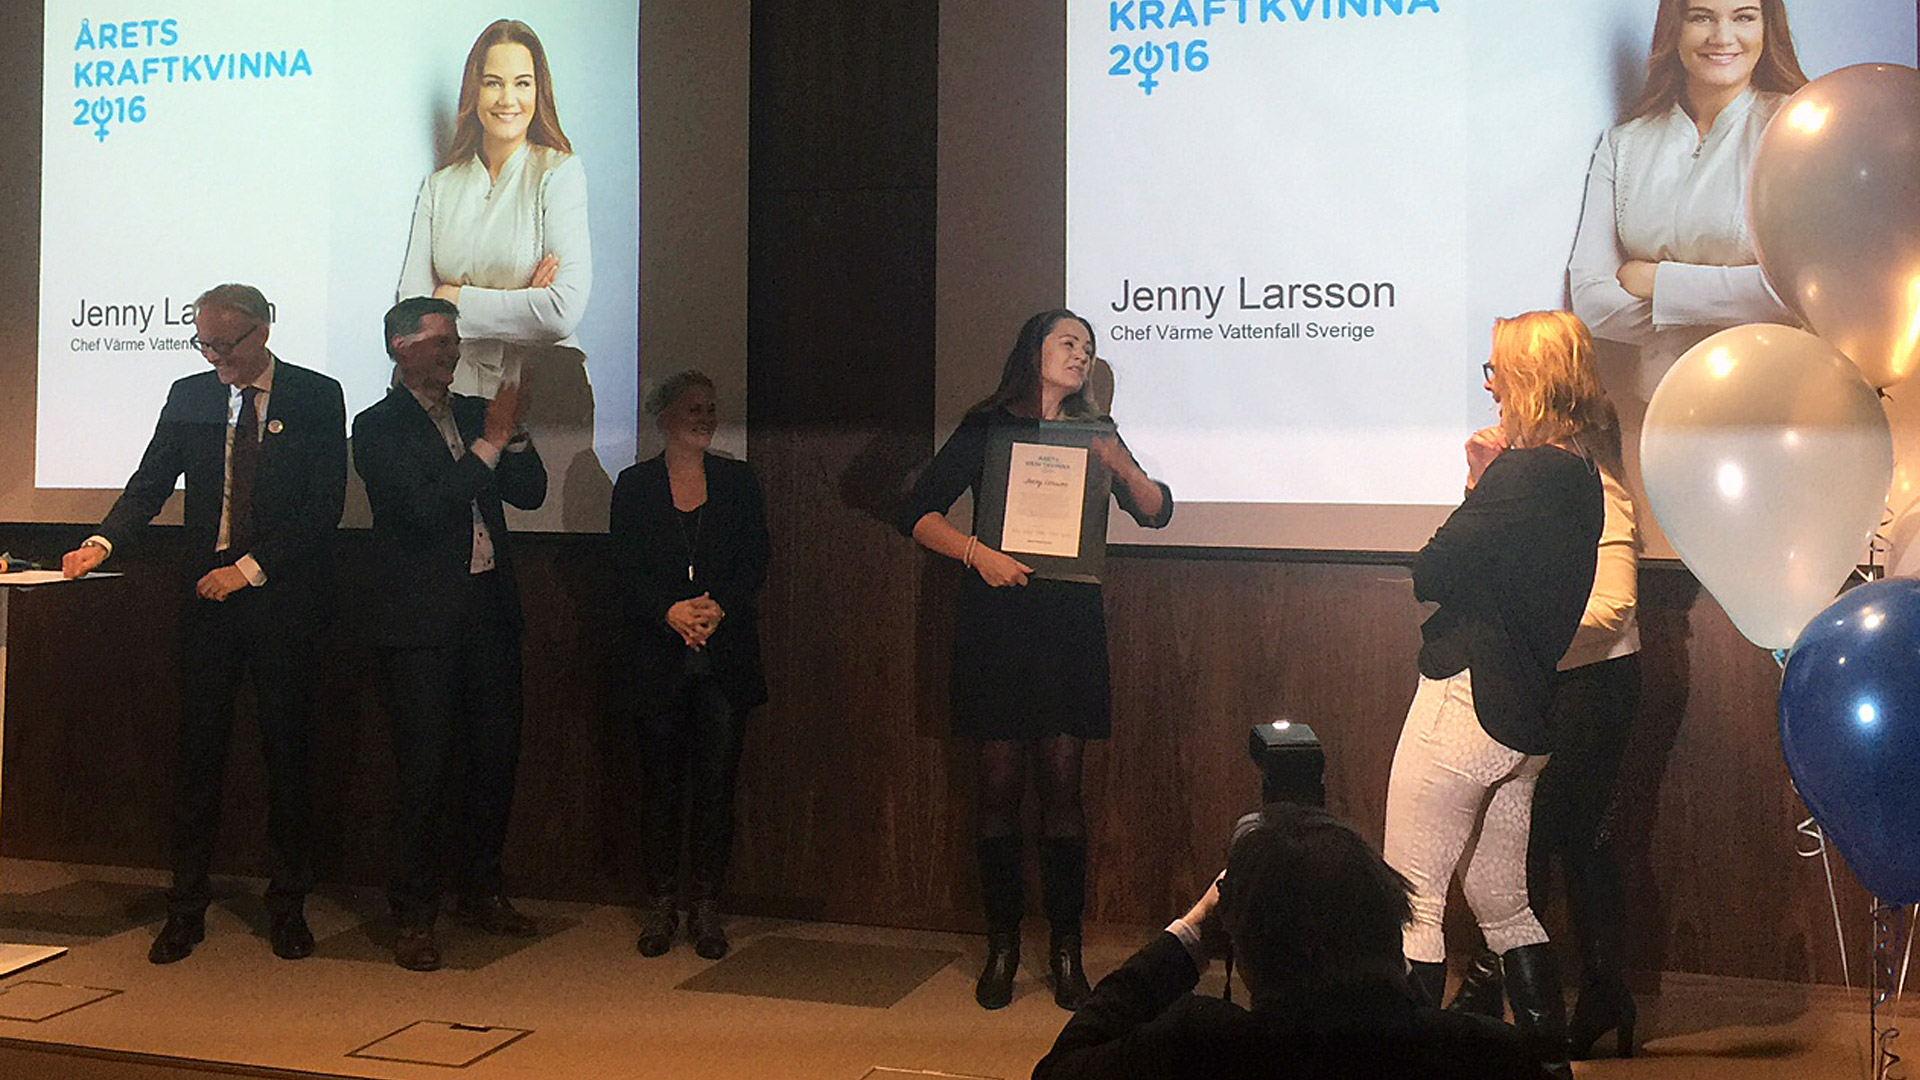 Jenny Larsson tar emot priset som Årets Kraftkvinna